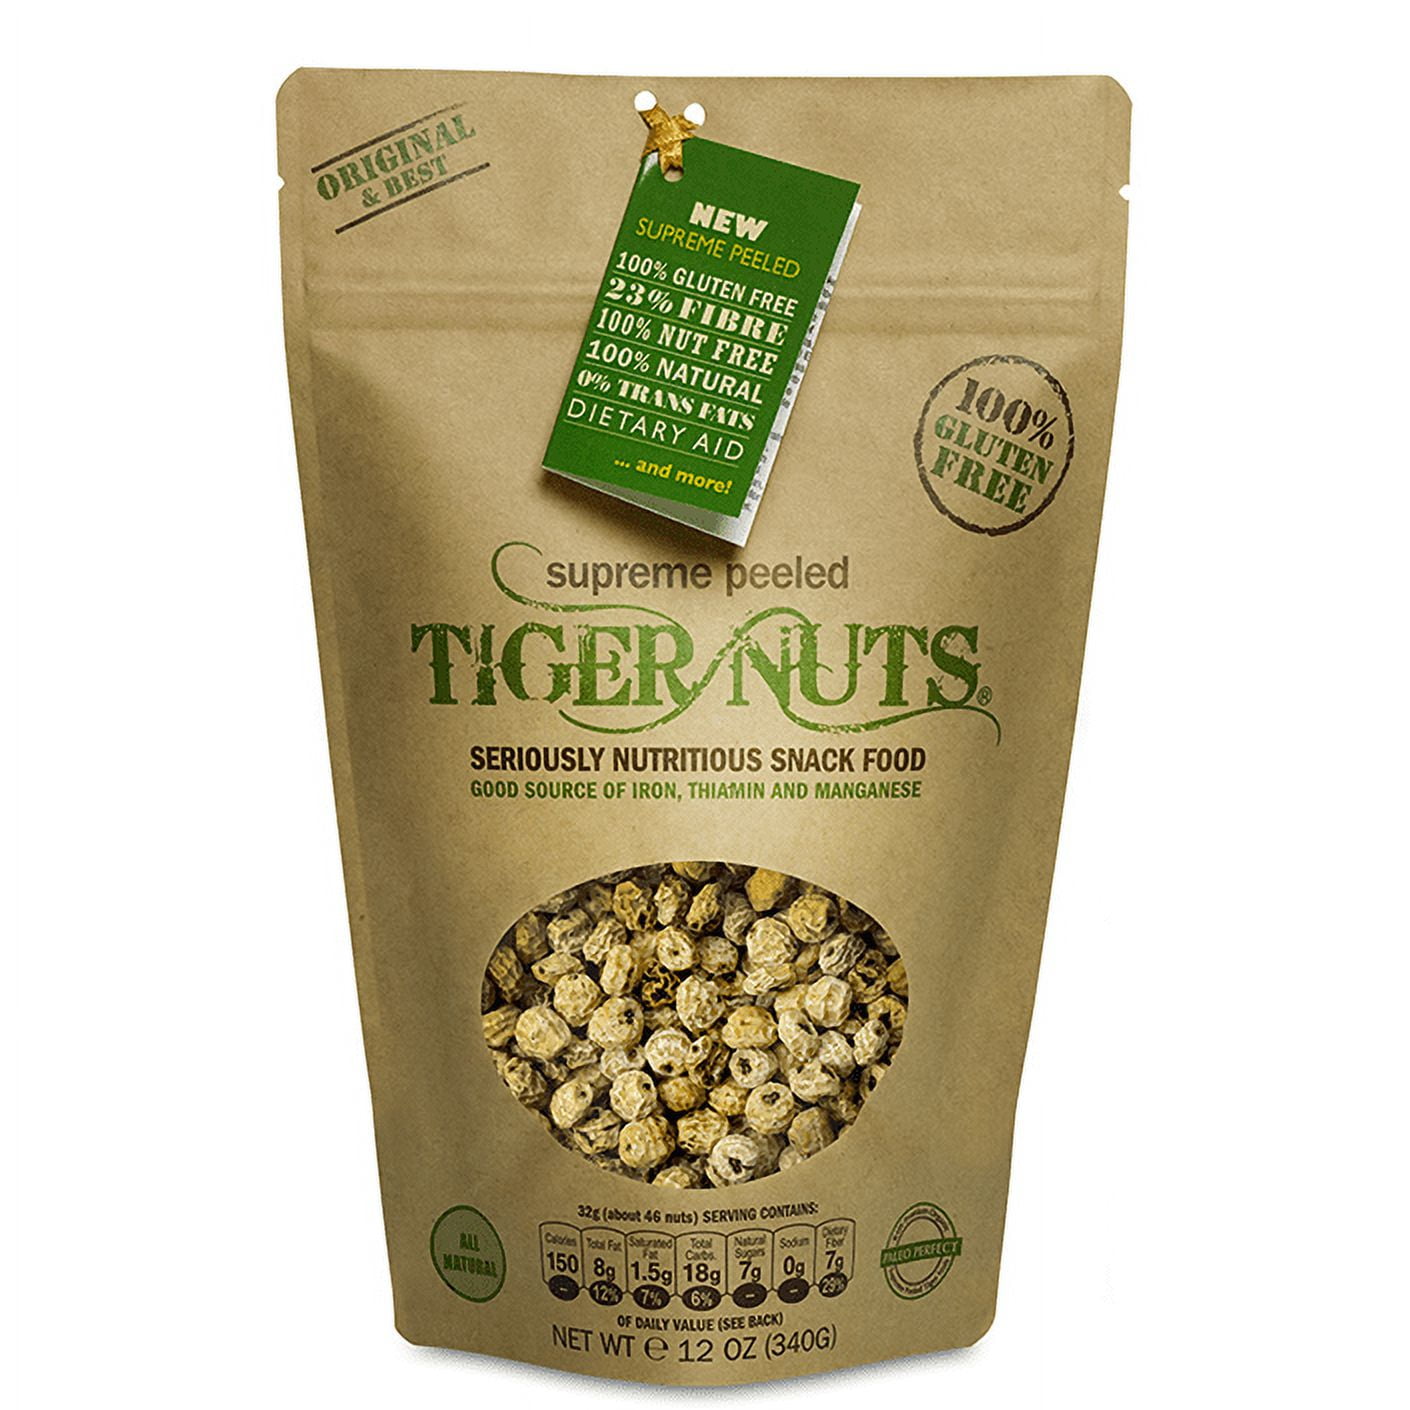 TIGER NUTS - SUPREME PEELED(12 oz)